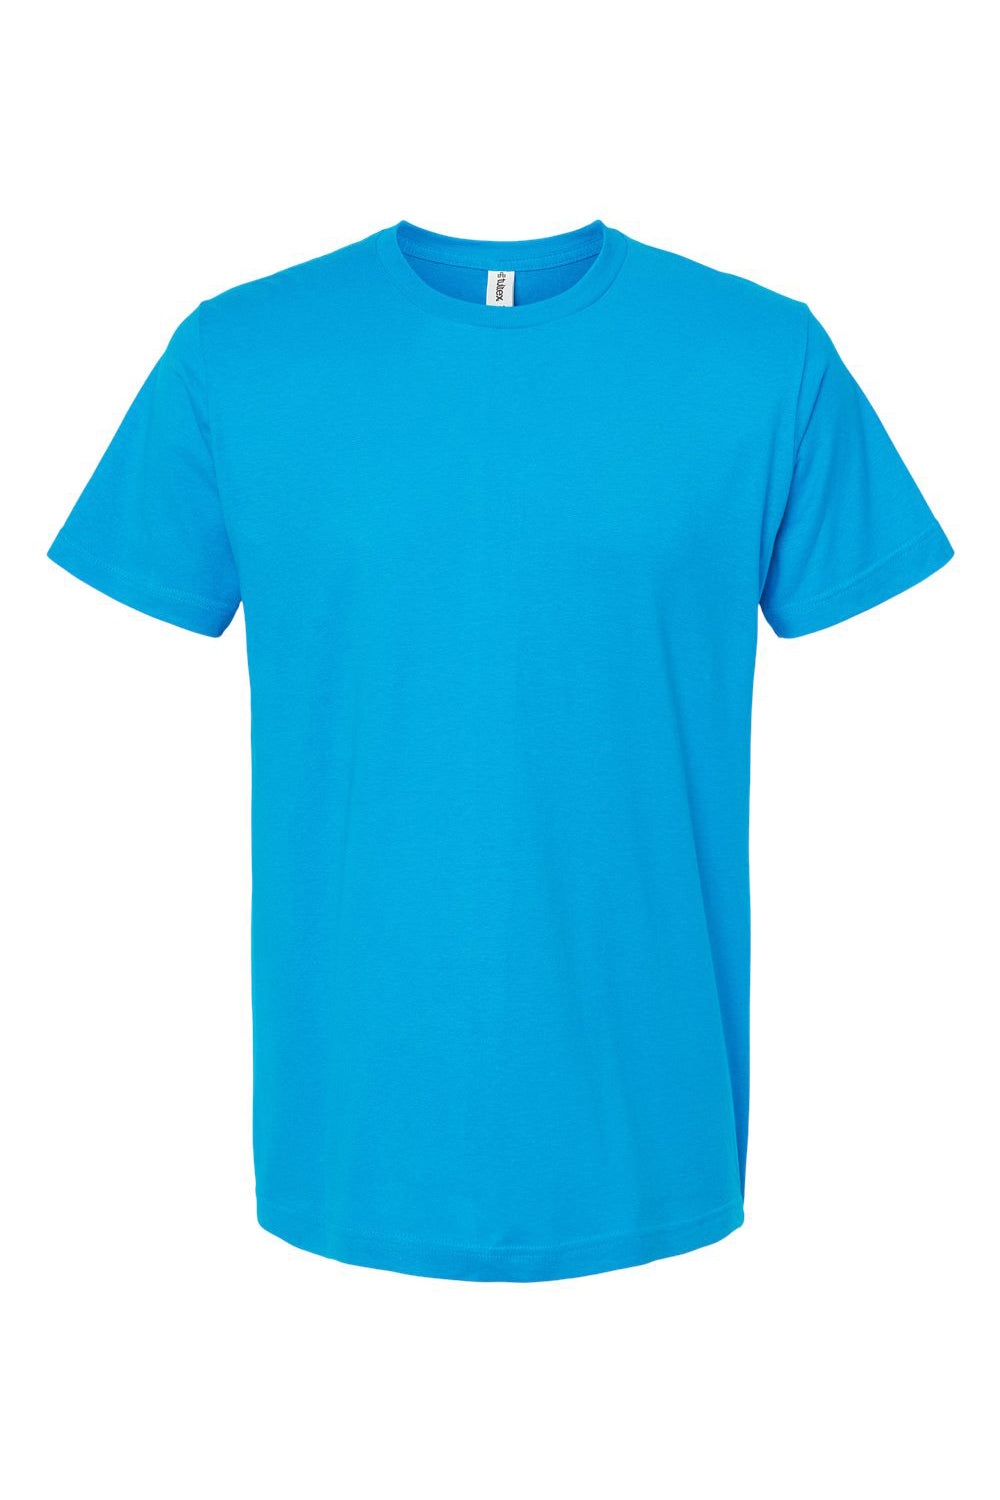 Tultex 202 Mens Fine Jersey Short Sleeve Crewneck T-Shirt Turquoise Blue Flat Front